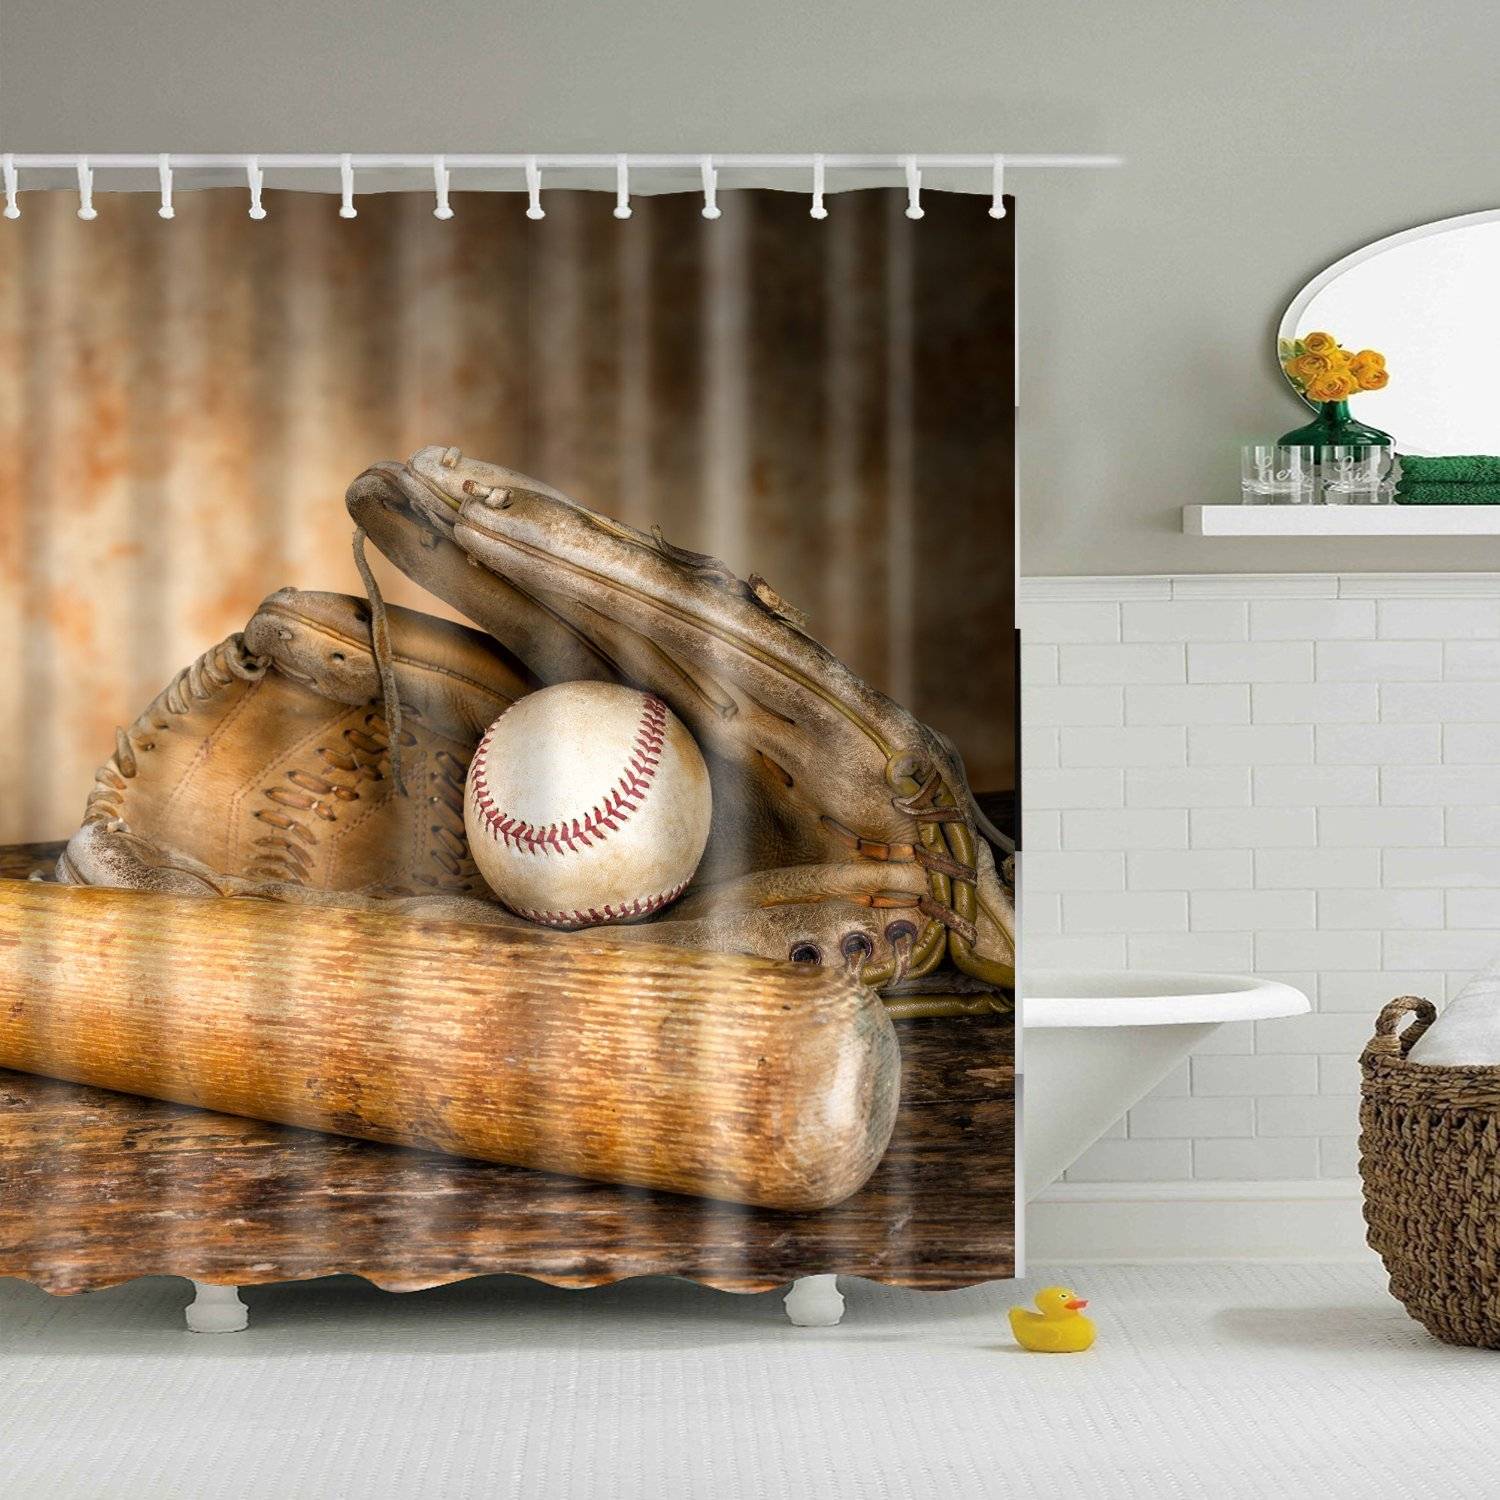 Baseball Shower Curtain Retro Gear Set Bathroom Good Idea For Decor The Warmthone